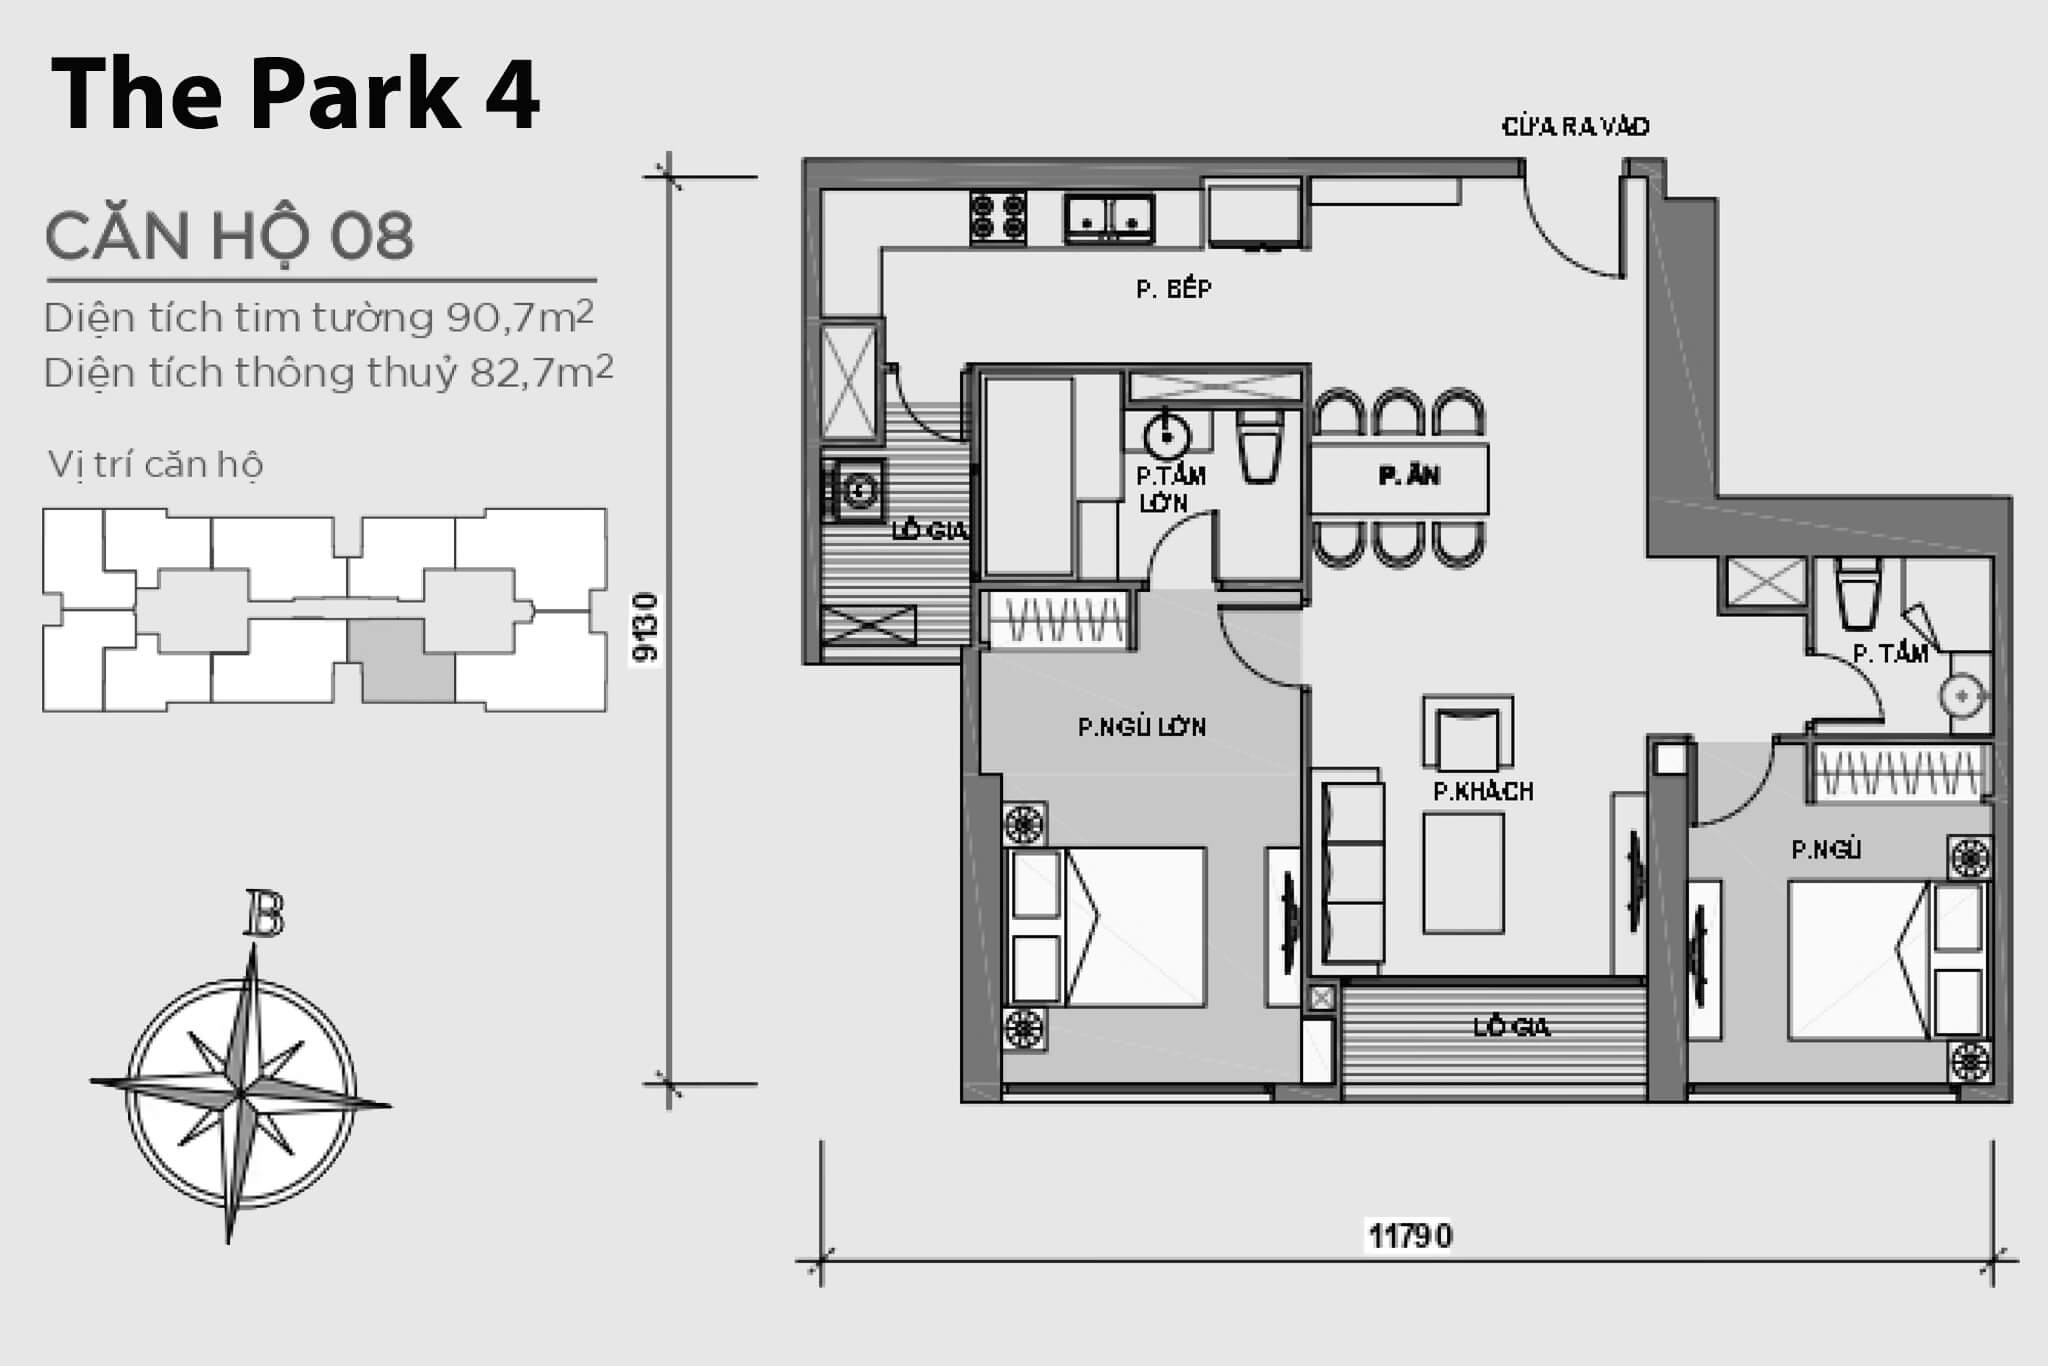 Layout căn hộ số 08 tòa The Park 4 - Mặt bằng Vinhomes Central Park